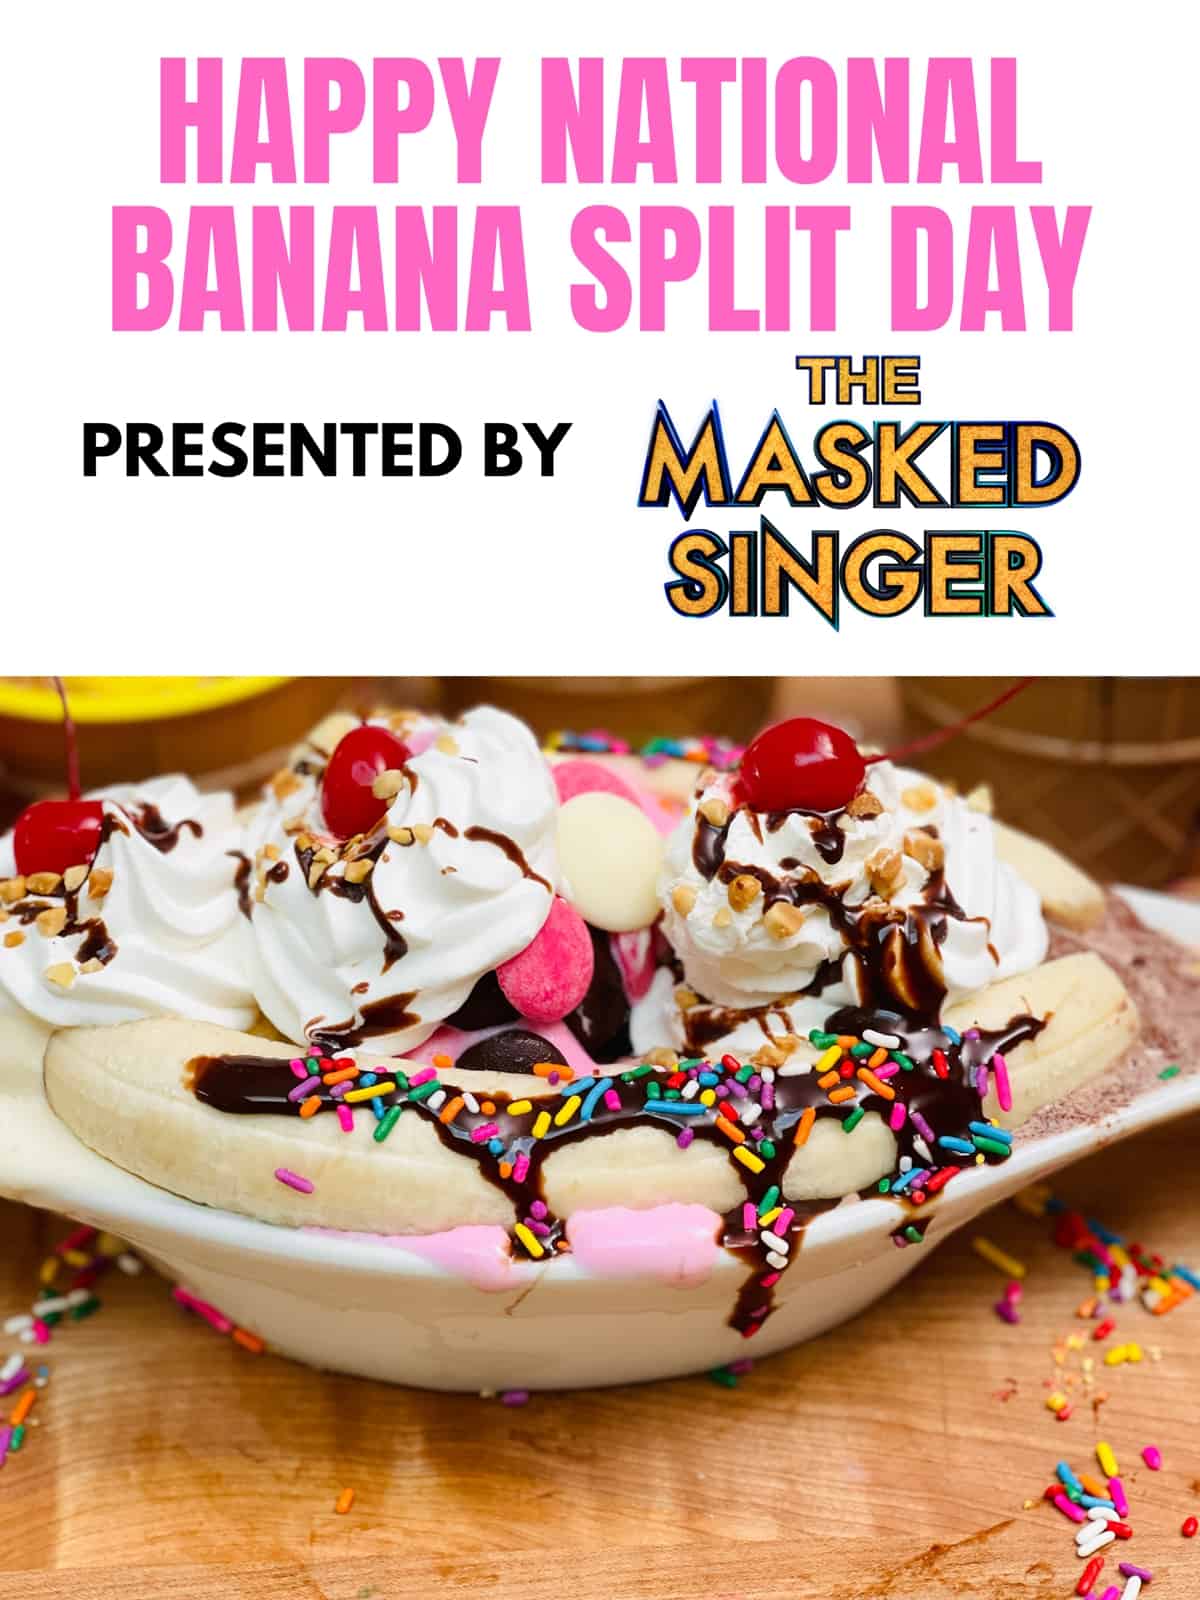 Celebrate National Banana Split Day With The Masked Singer!